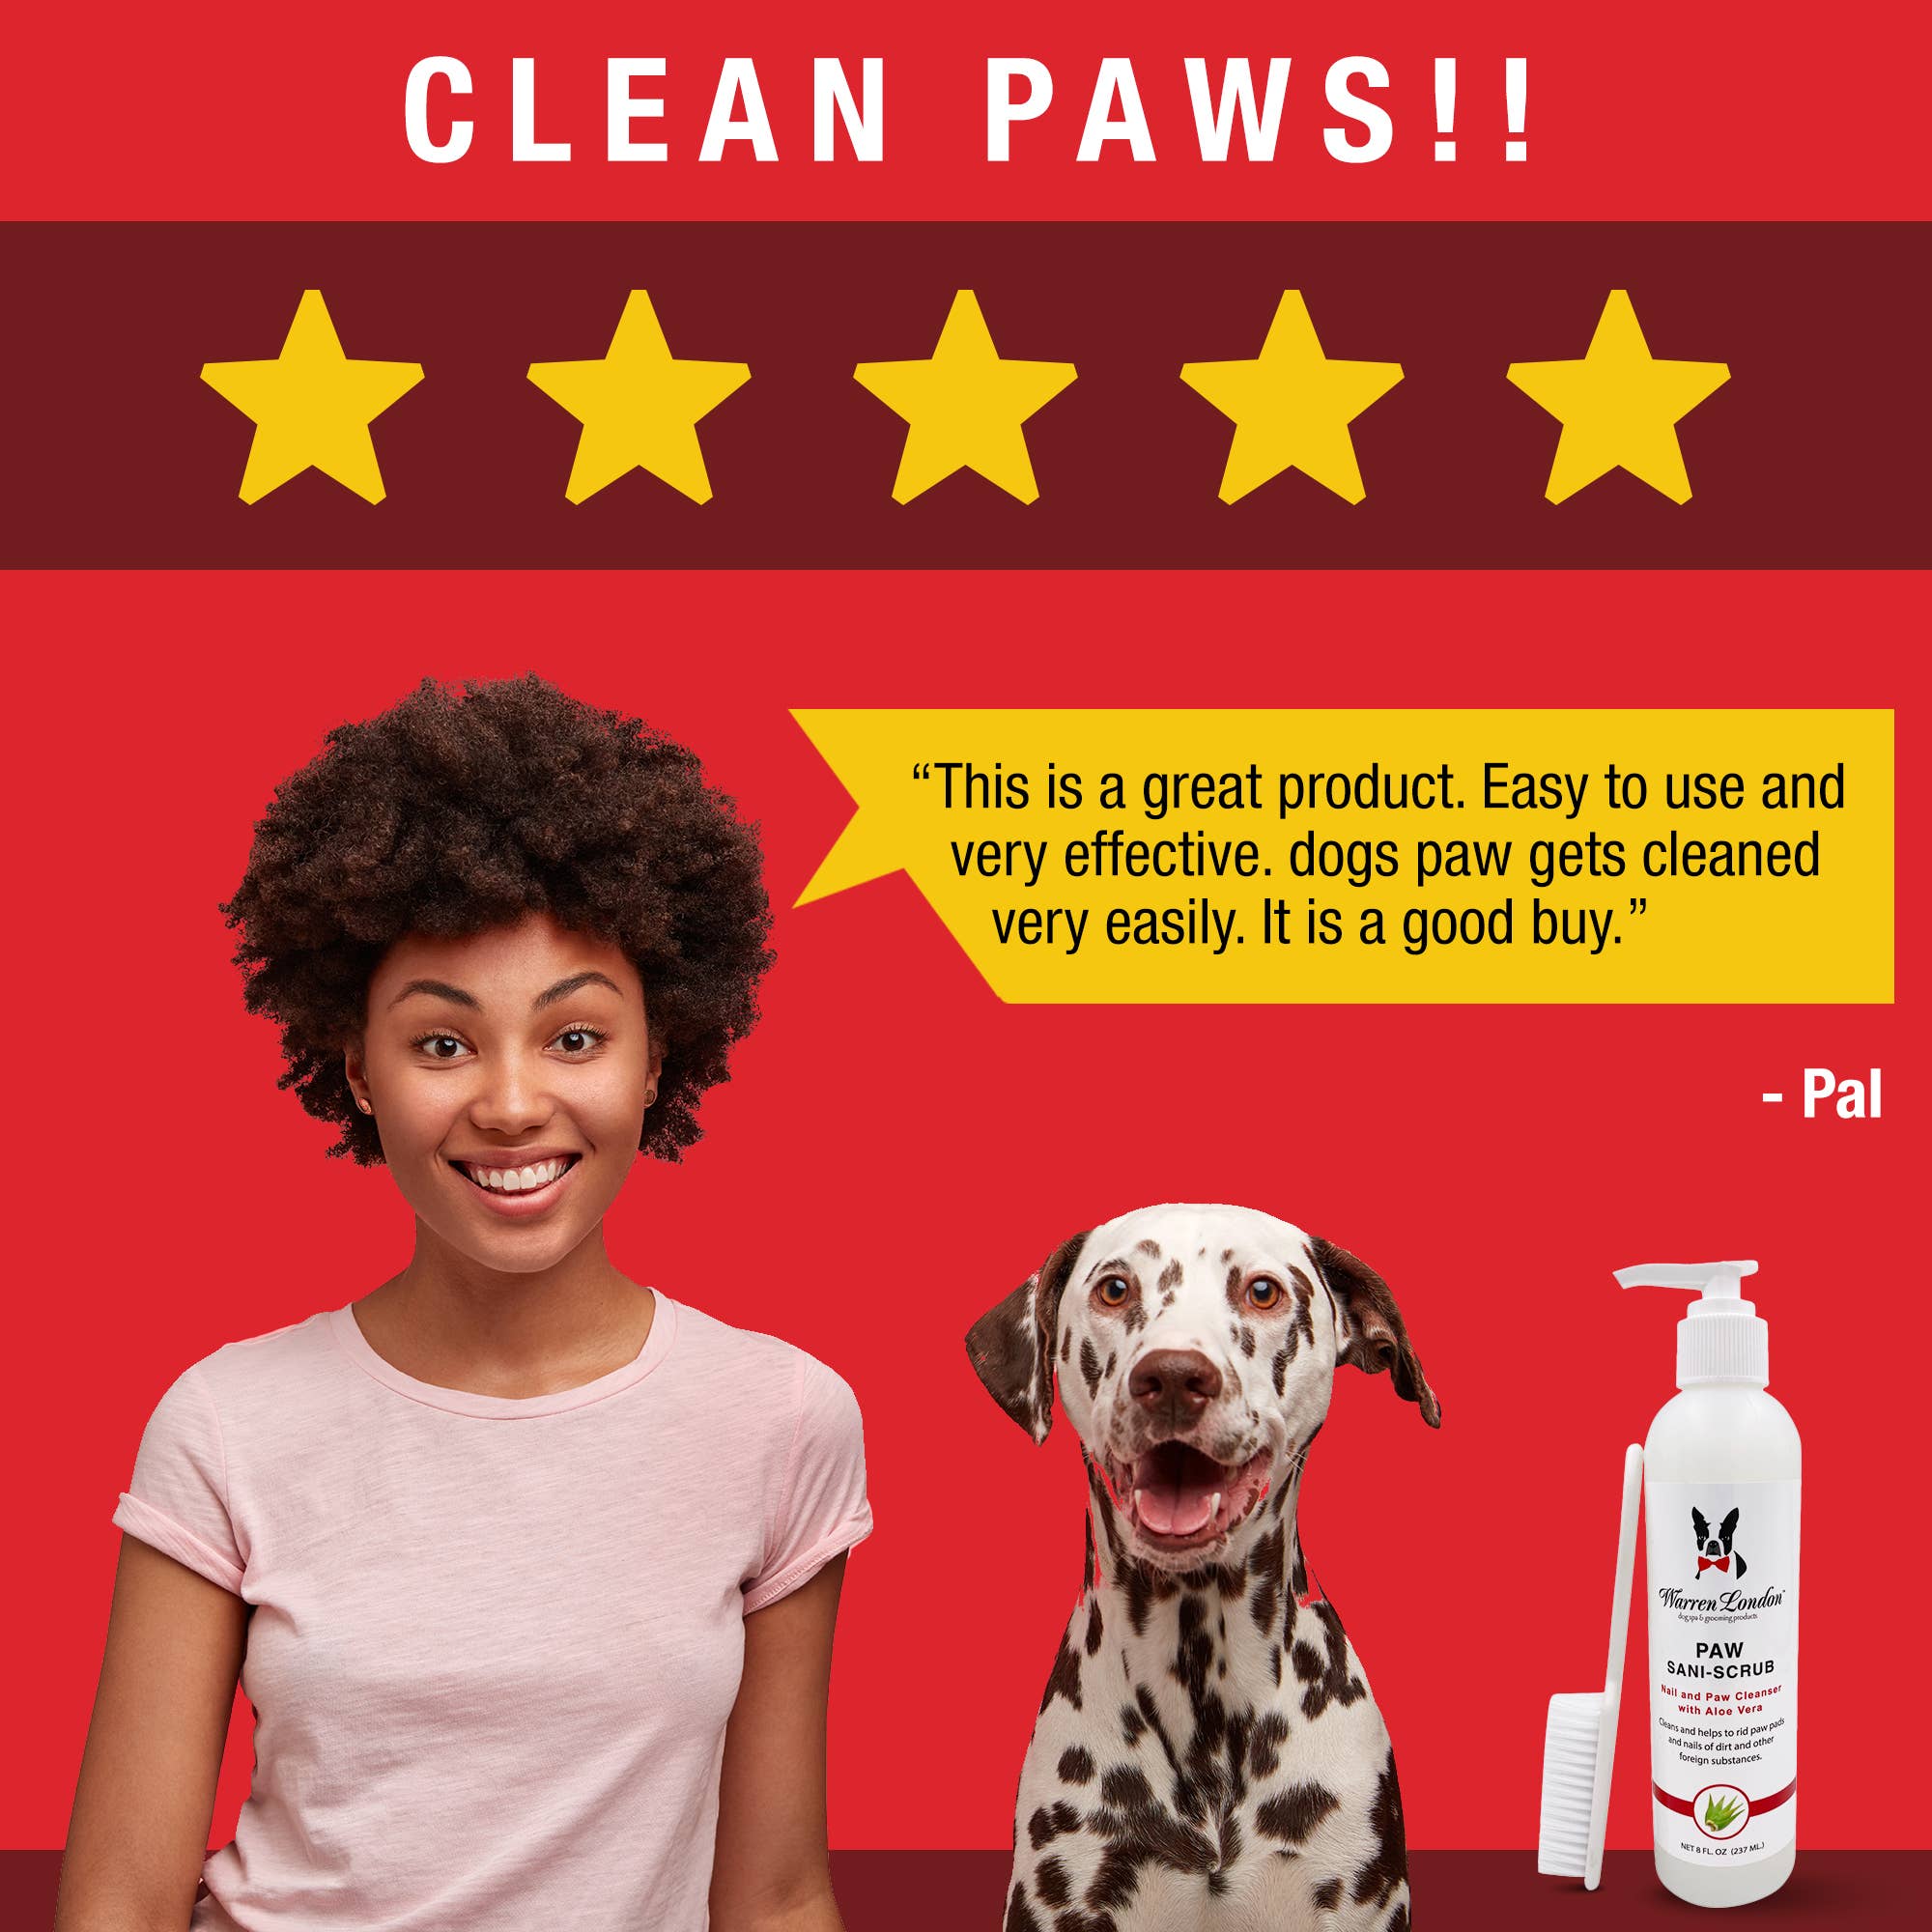 Warren London Dog Products - Paw Sani-Scrub - 2 Sizes